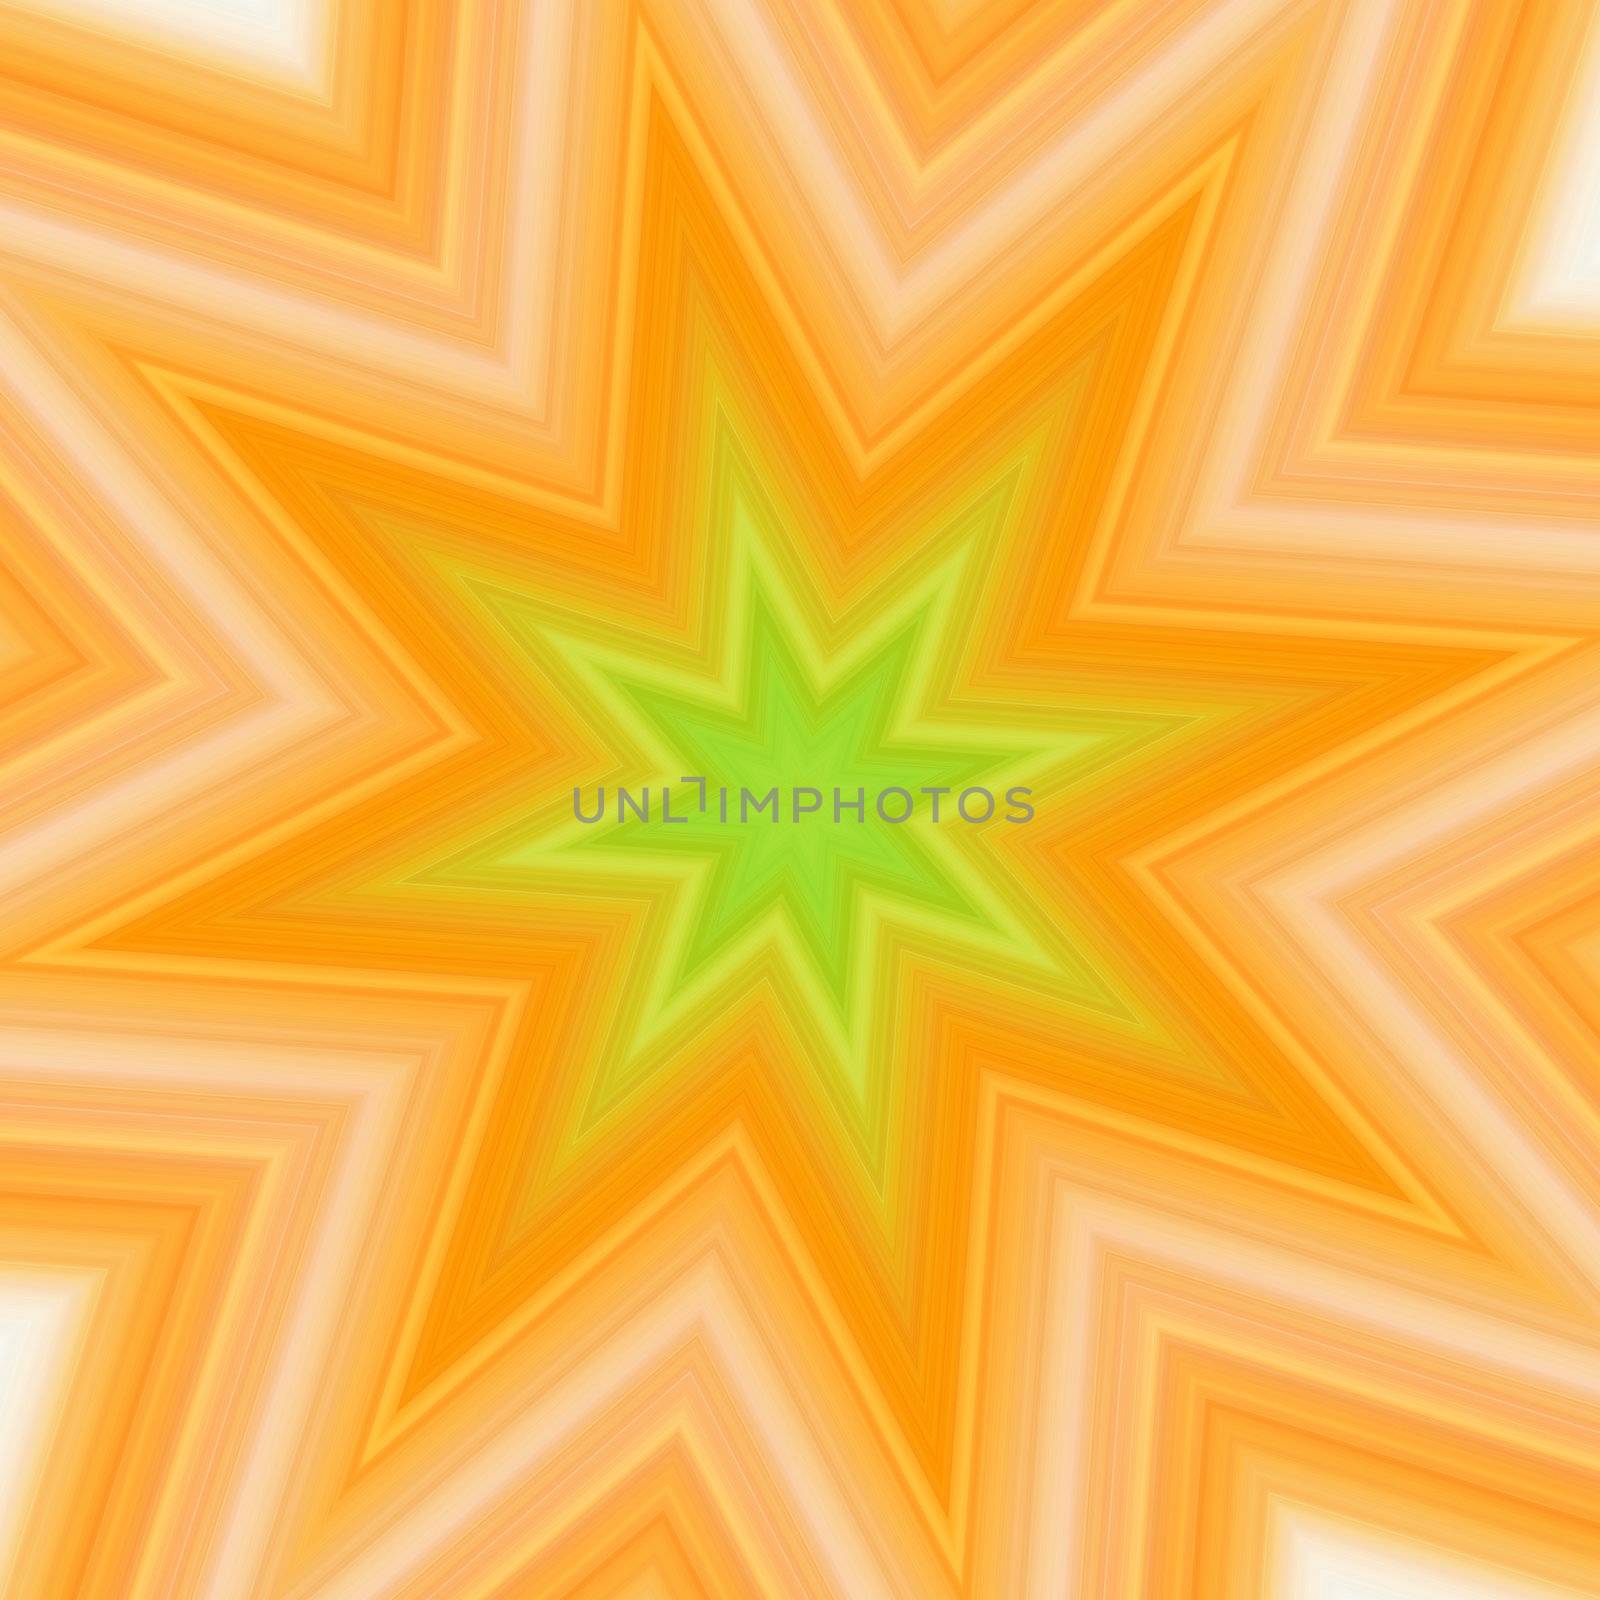 Yellow-green splash star. High resolution abstract image